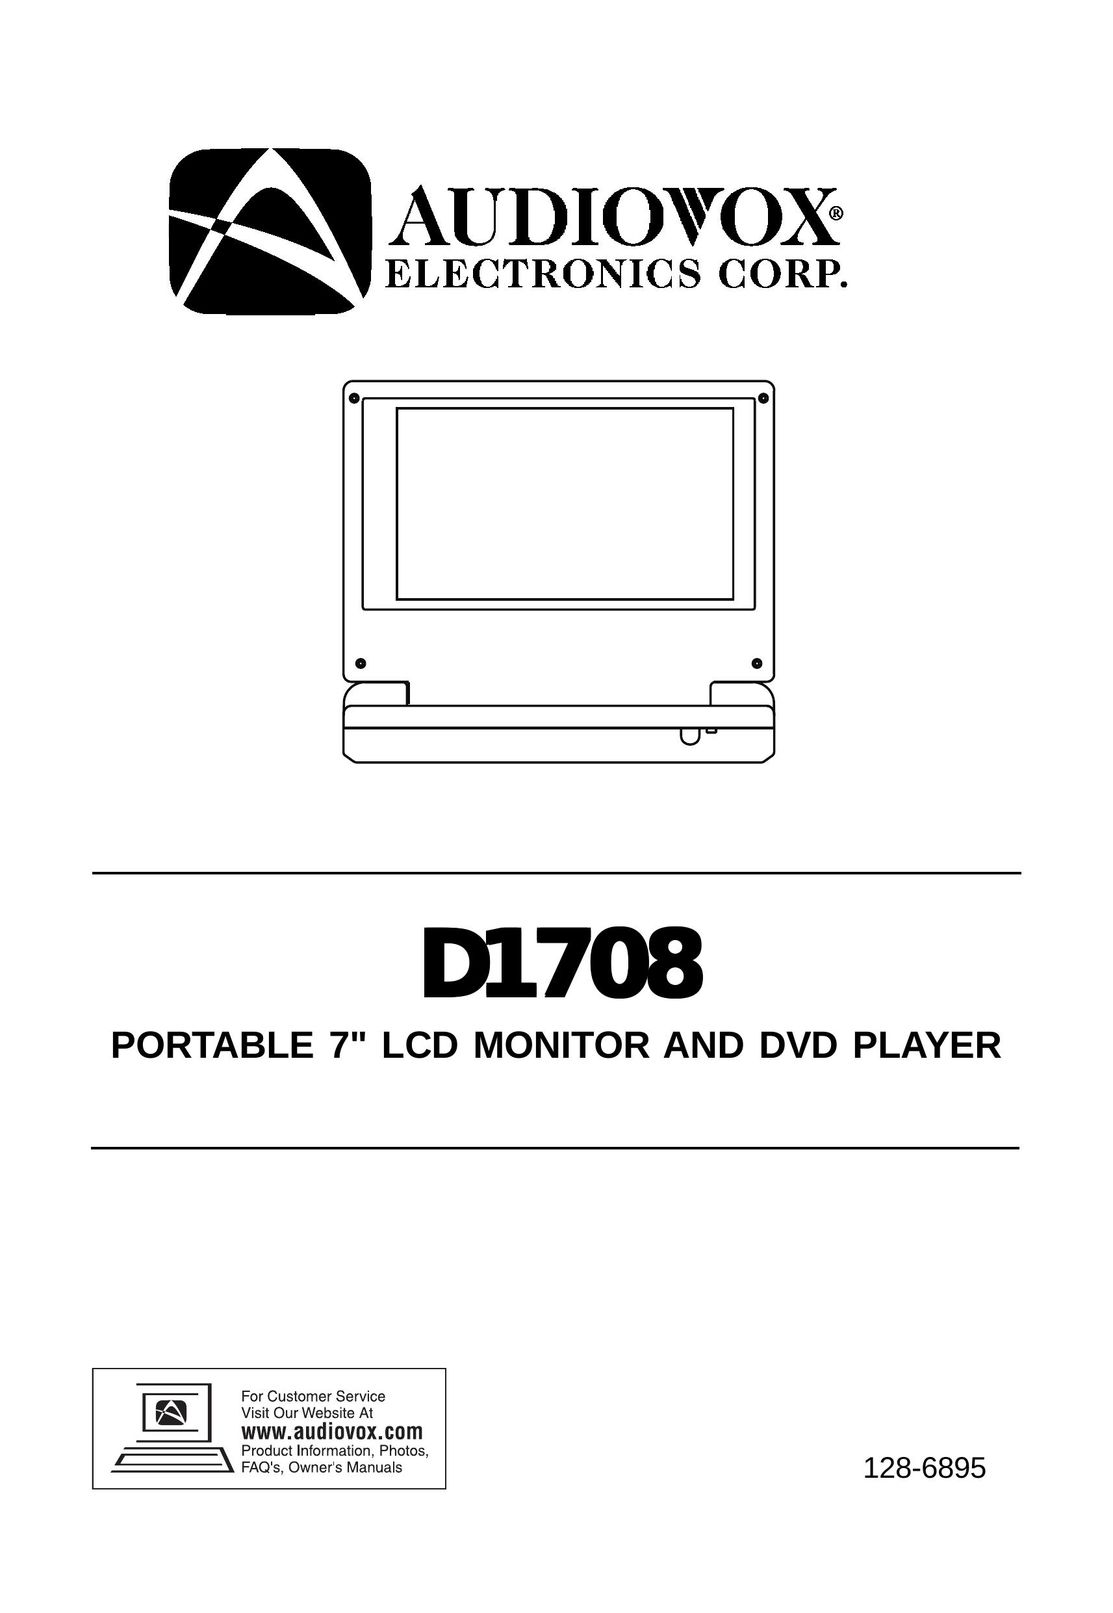 Audiovox D1708 Portable DVD Player User Manual